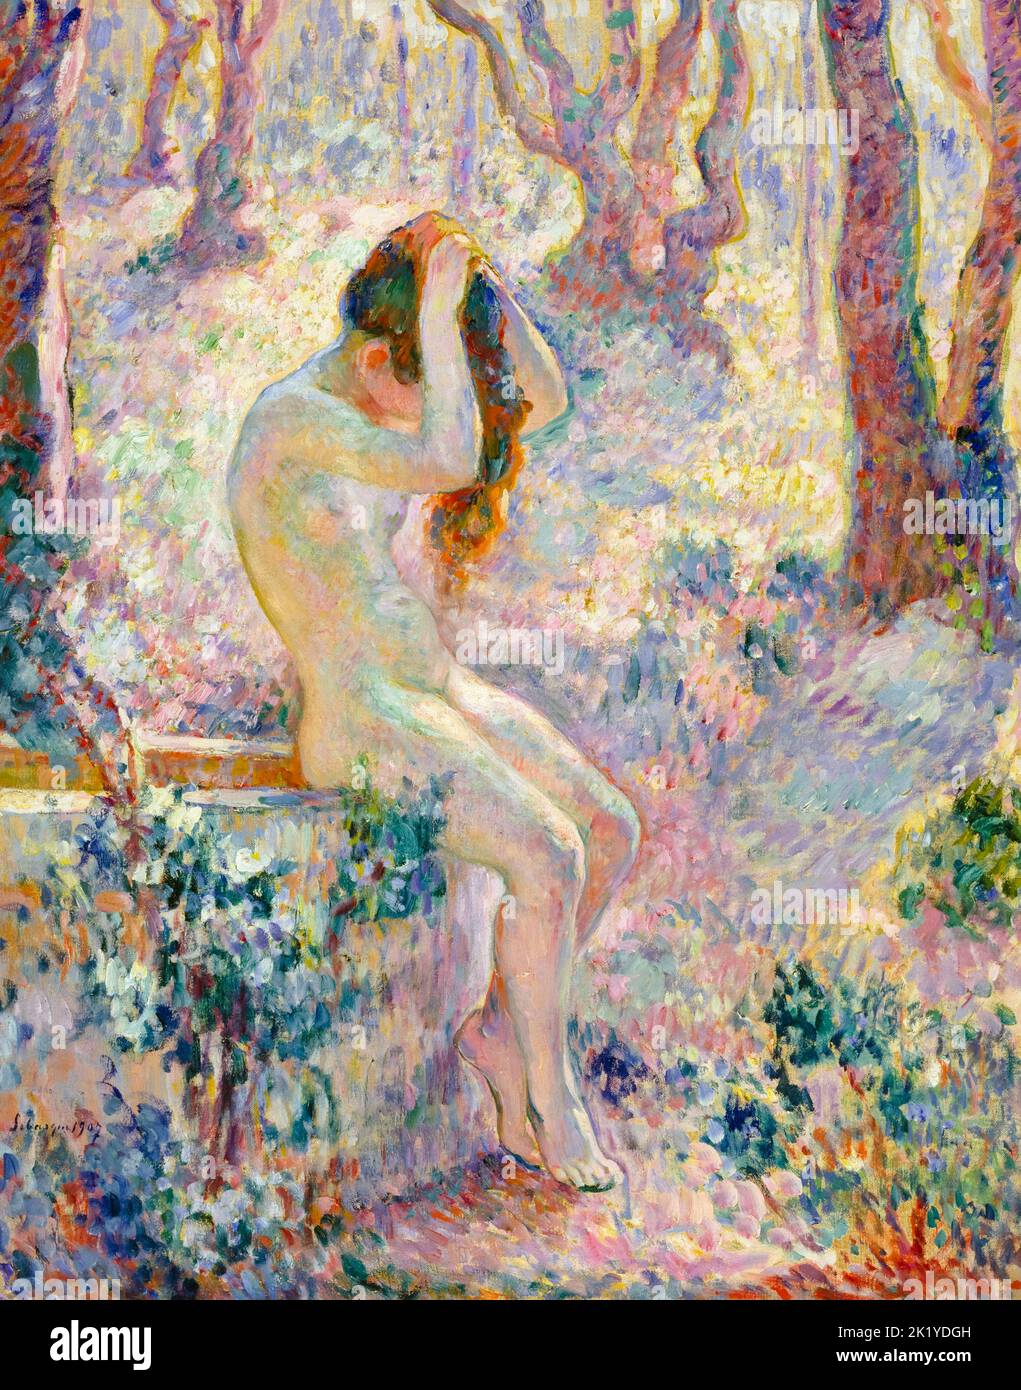 Henri Lebasque, joven desnudo sentado al borde de un pozo, pintando al óleo sobre lienzo, 1907 Foto de stock